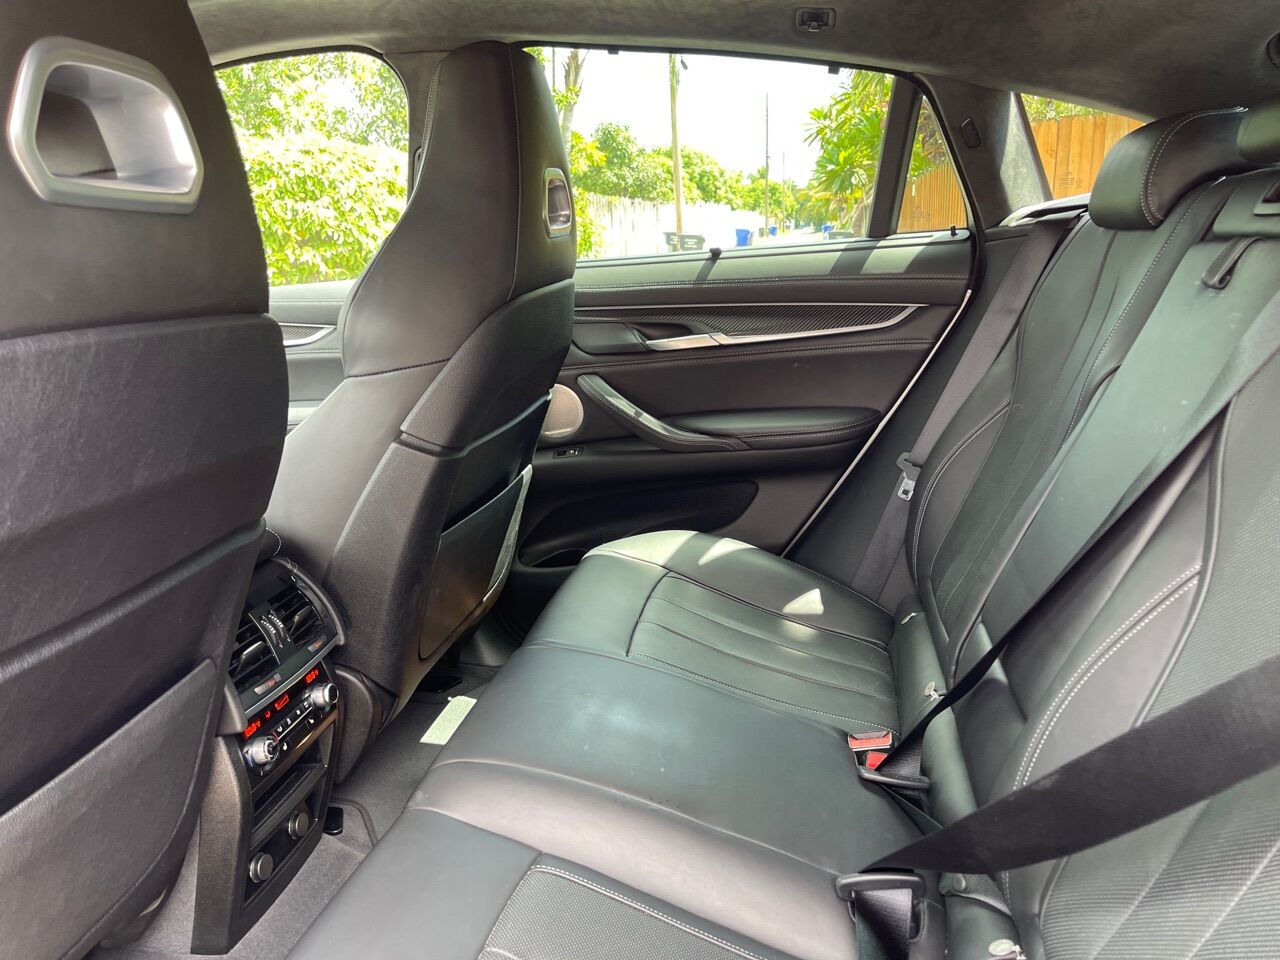 2019 BMW X6 SUV / Crossover - $44,850